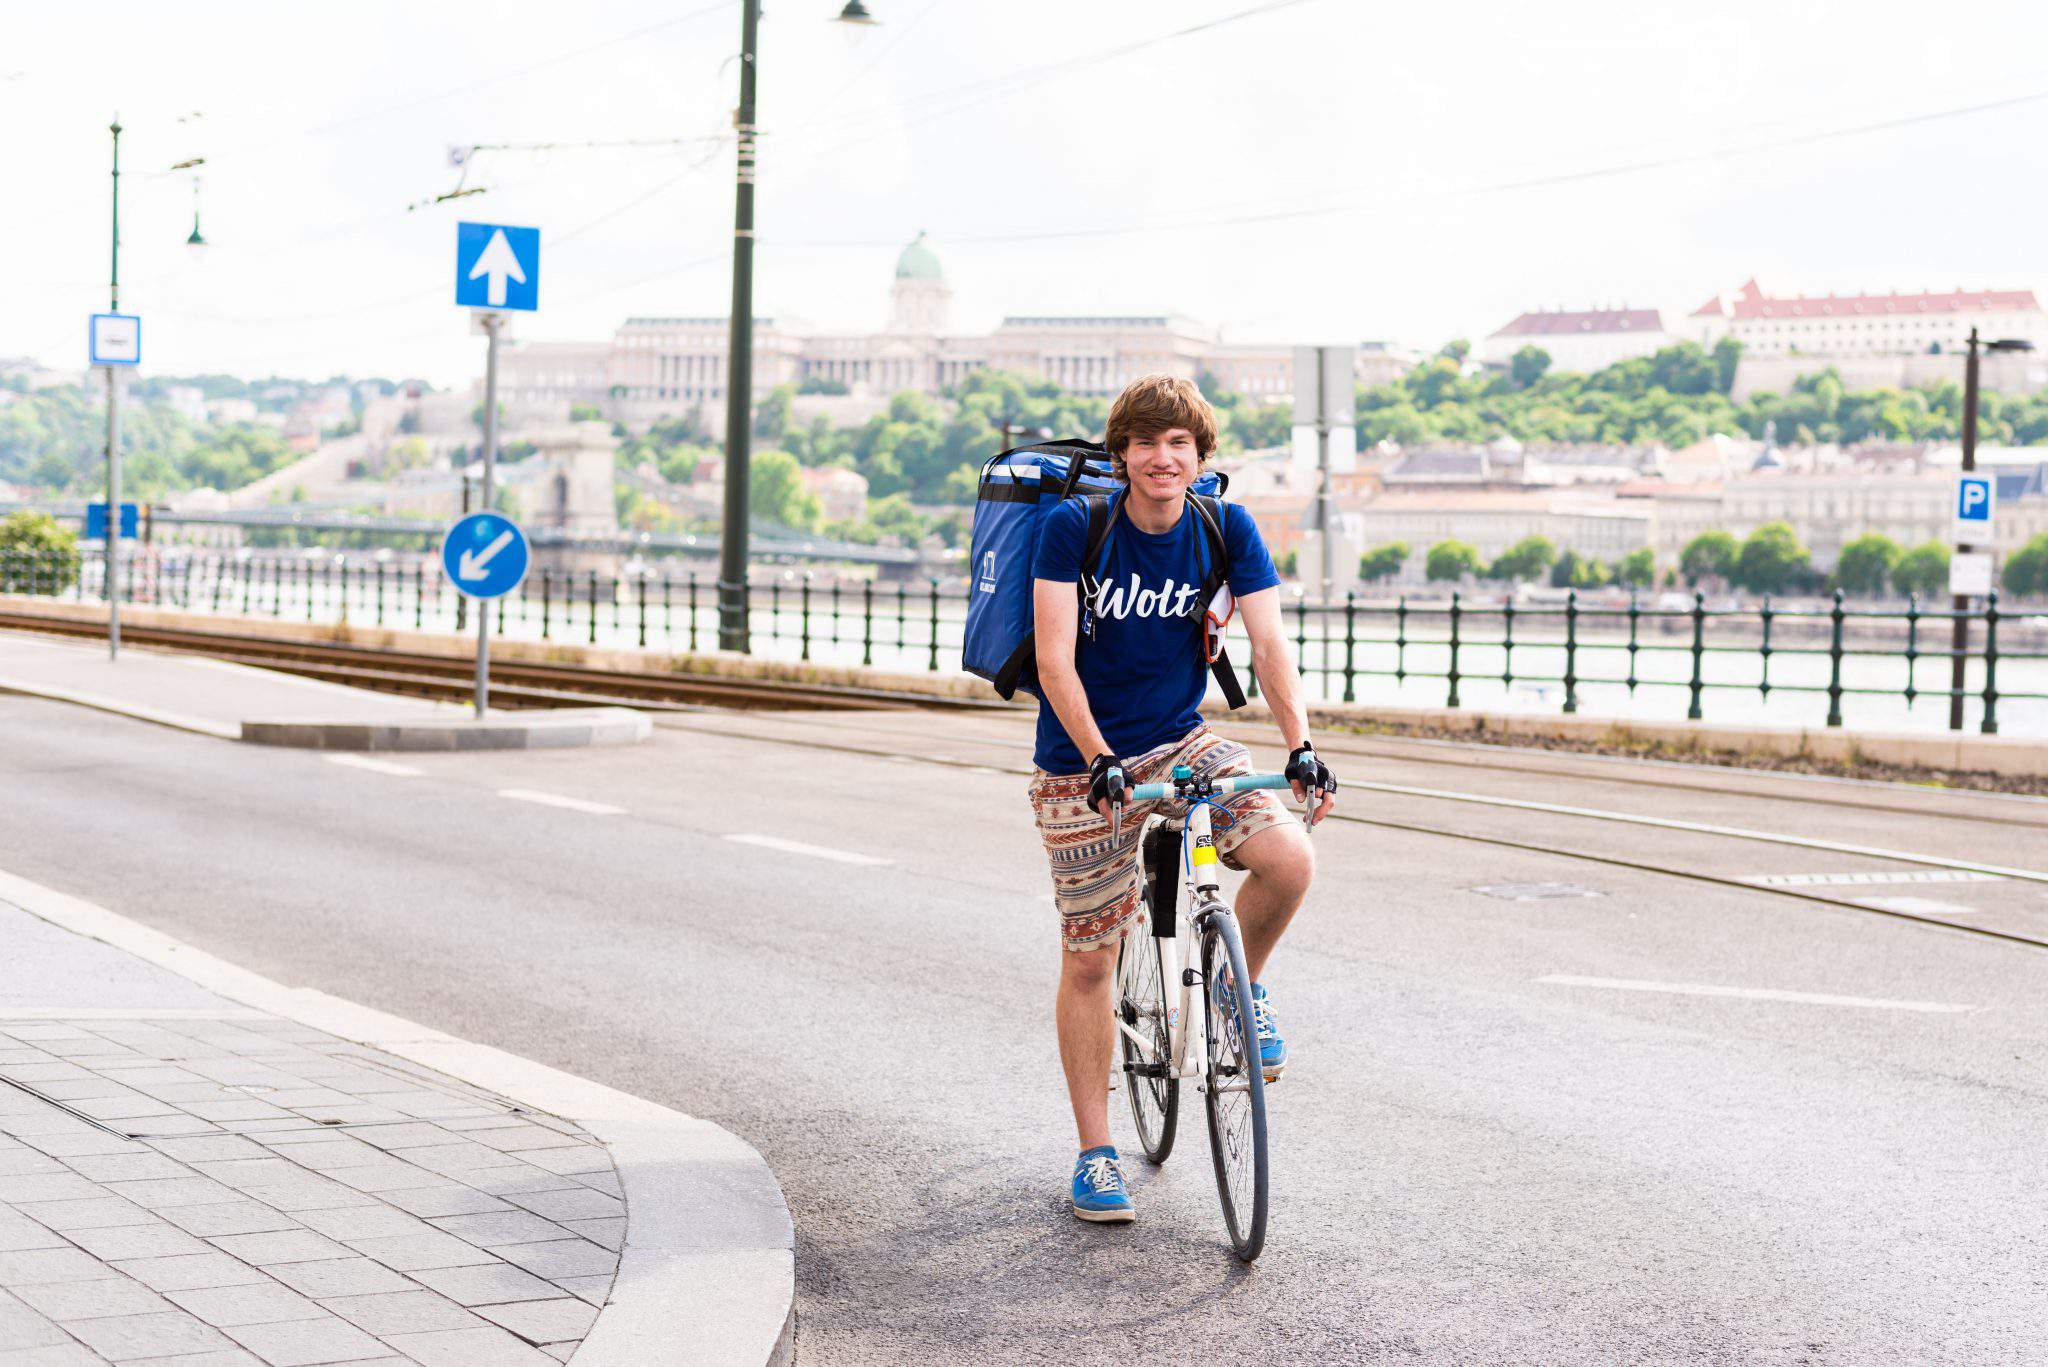 Biciklis futár Budapesten applicazione alimentare di lupi Budapest